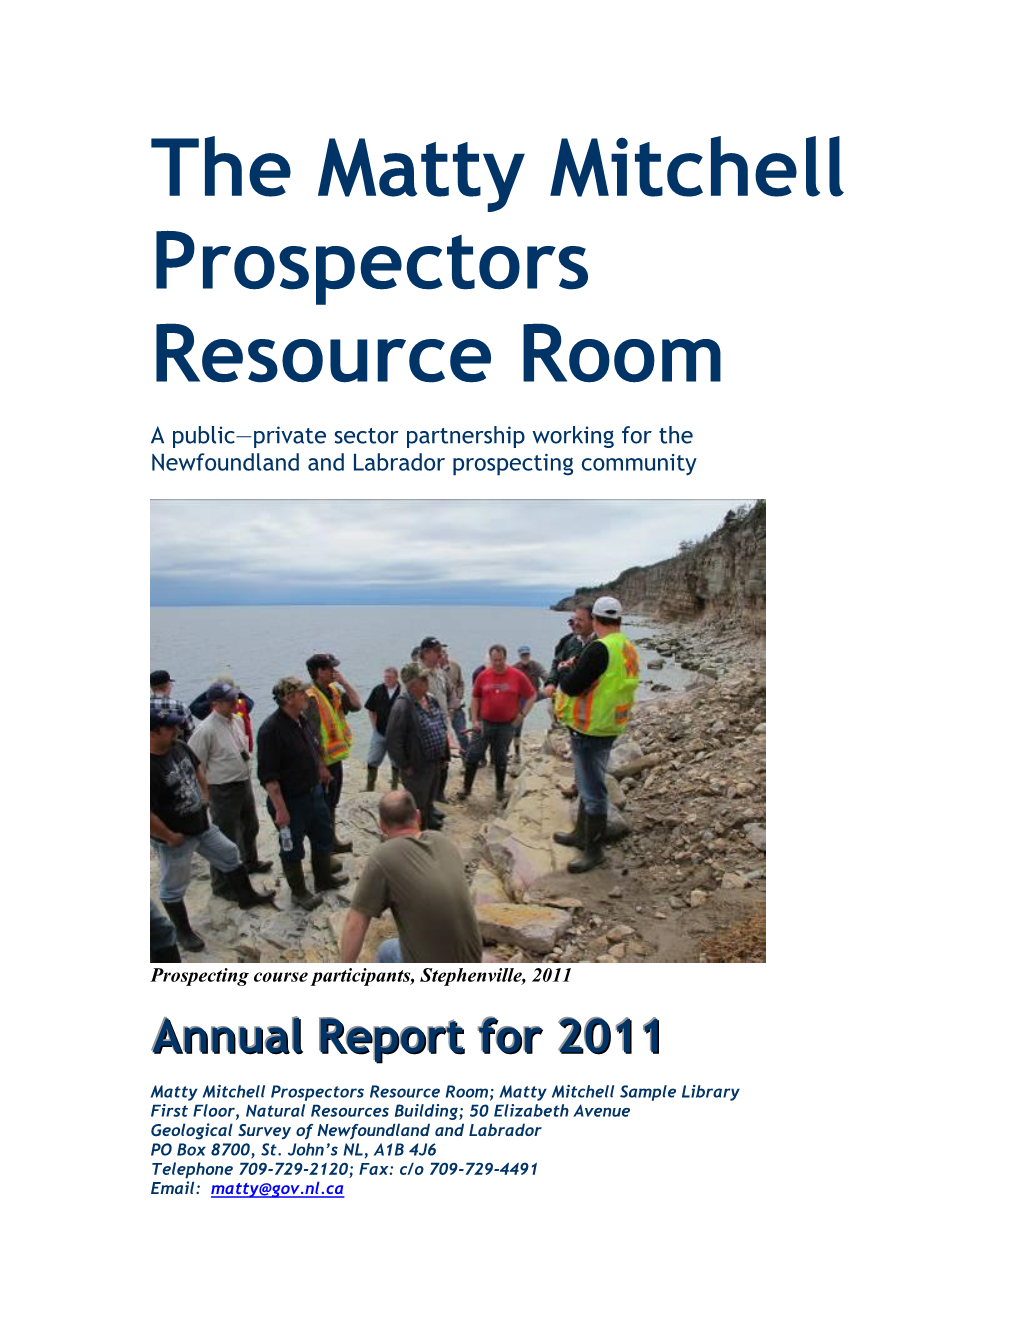 The Matty Mitchell Prospectors Resource Room